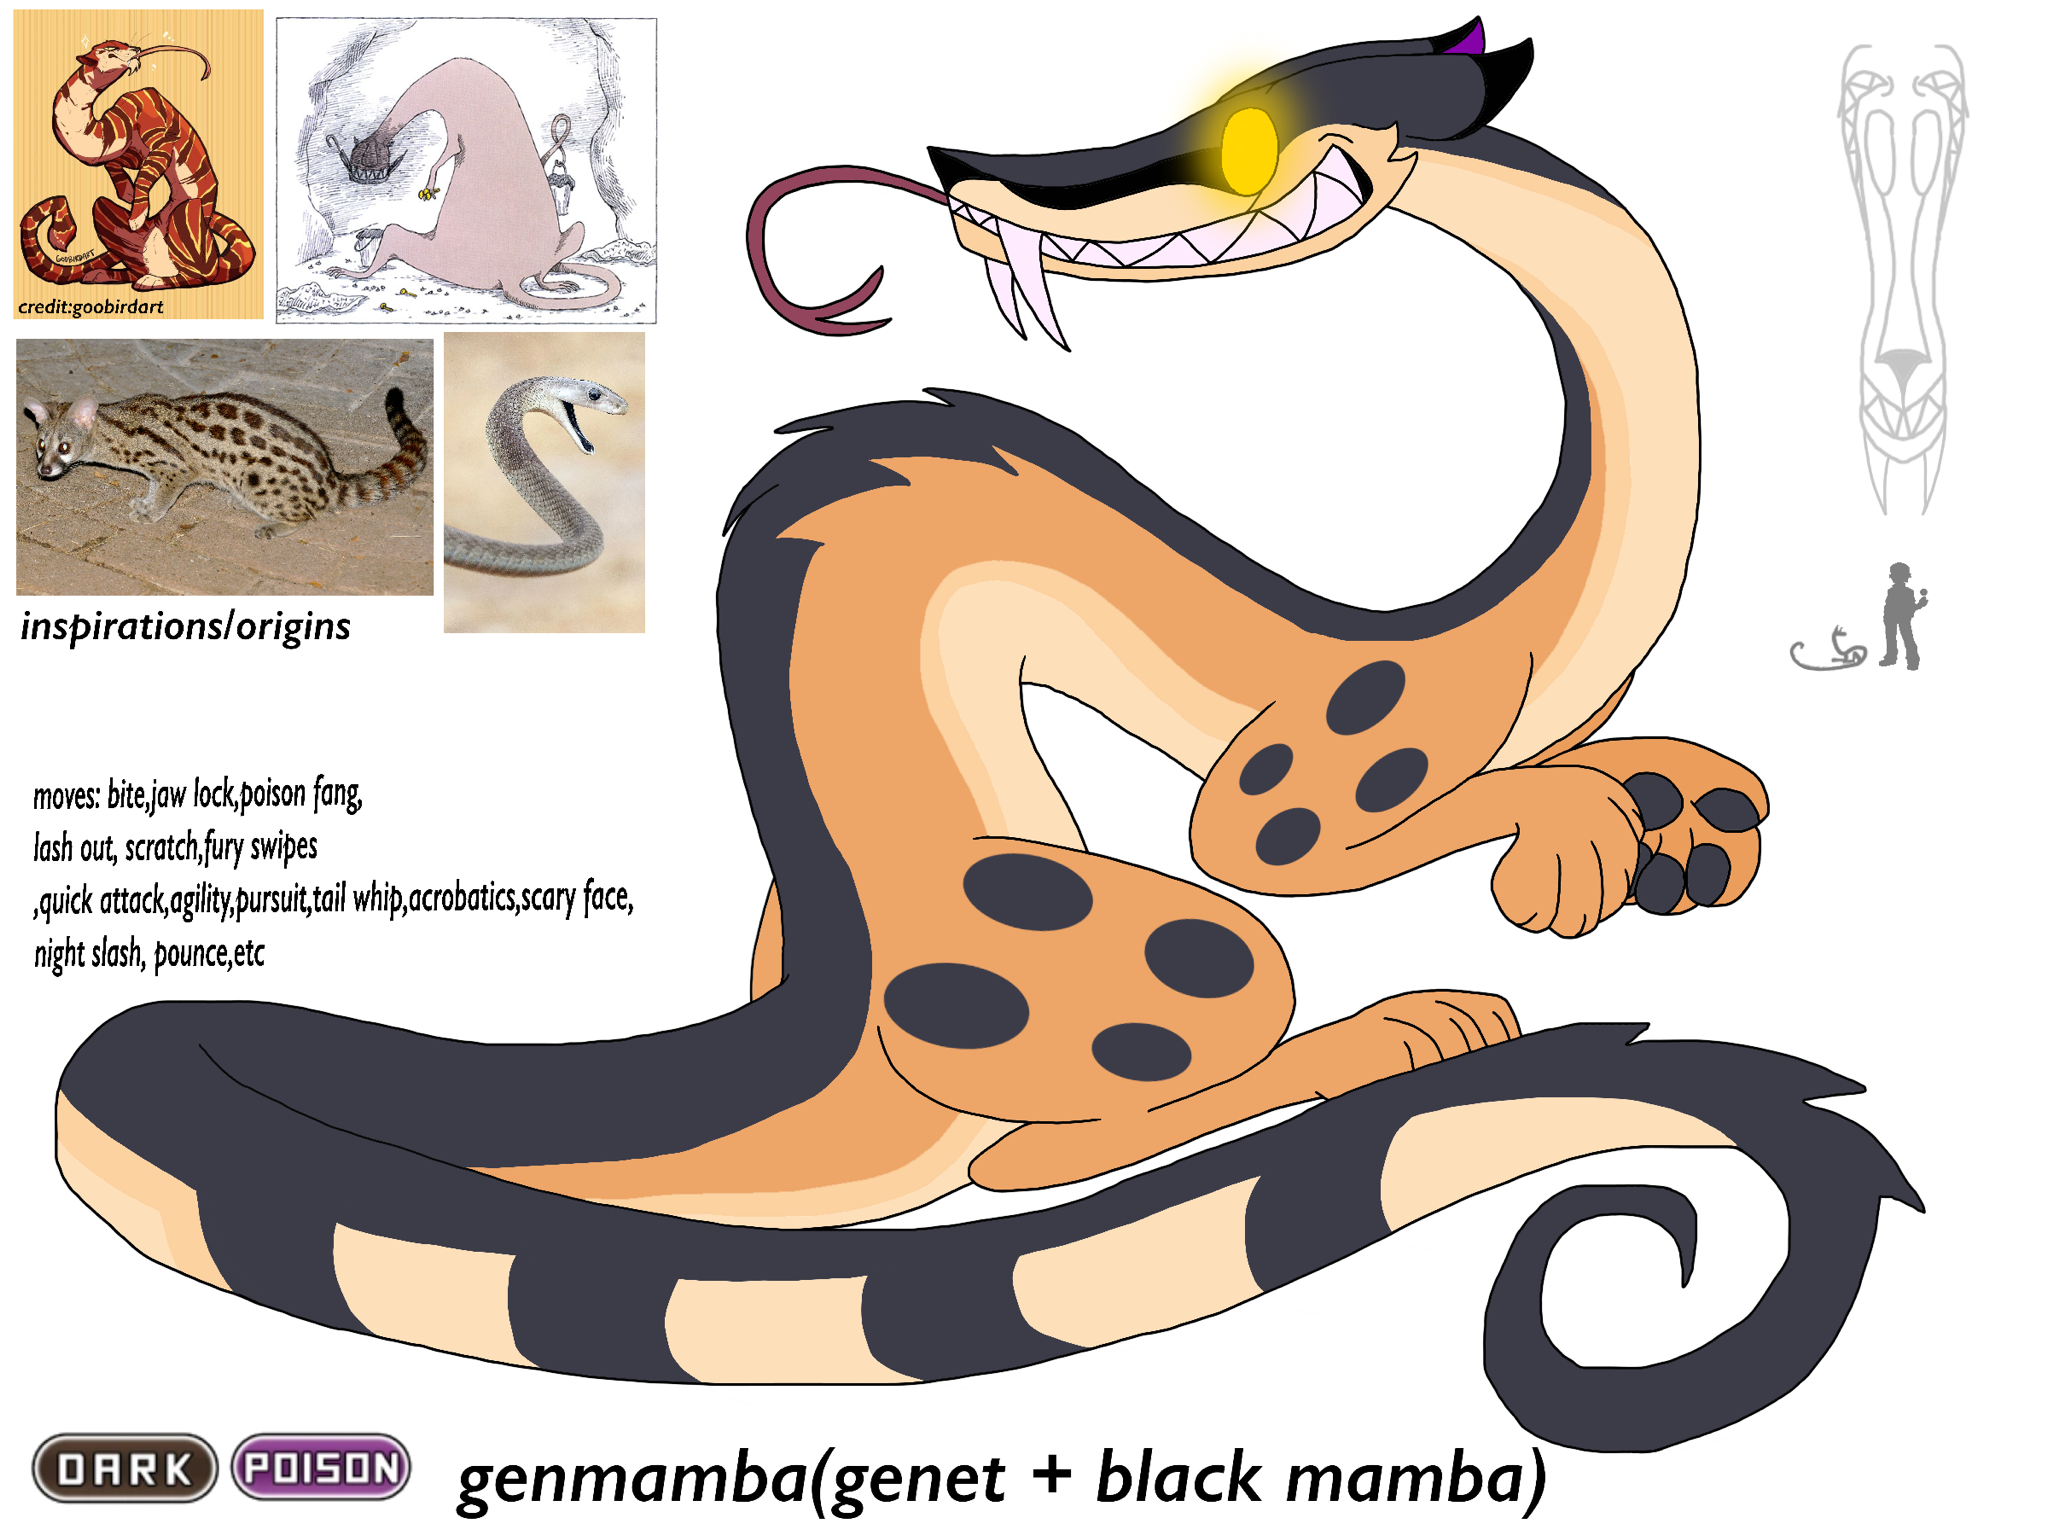 genmamba: “the venomous tree-climbing  pokemon” (so any solutions for its dex-entry & name alternate?)